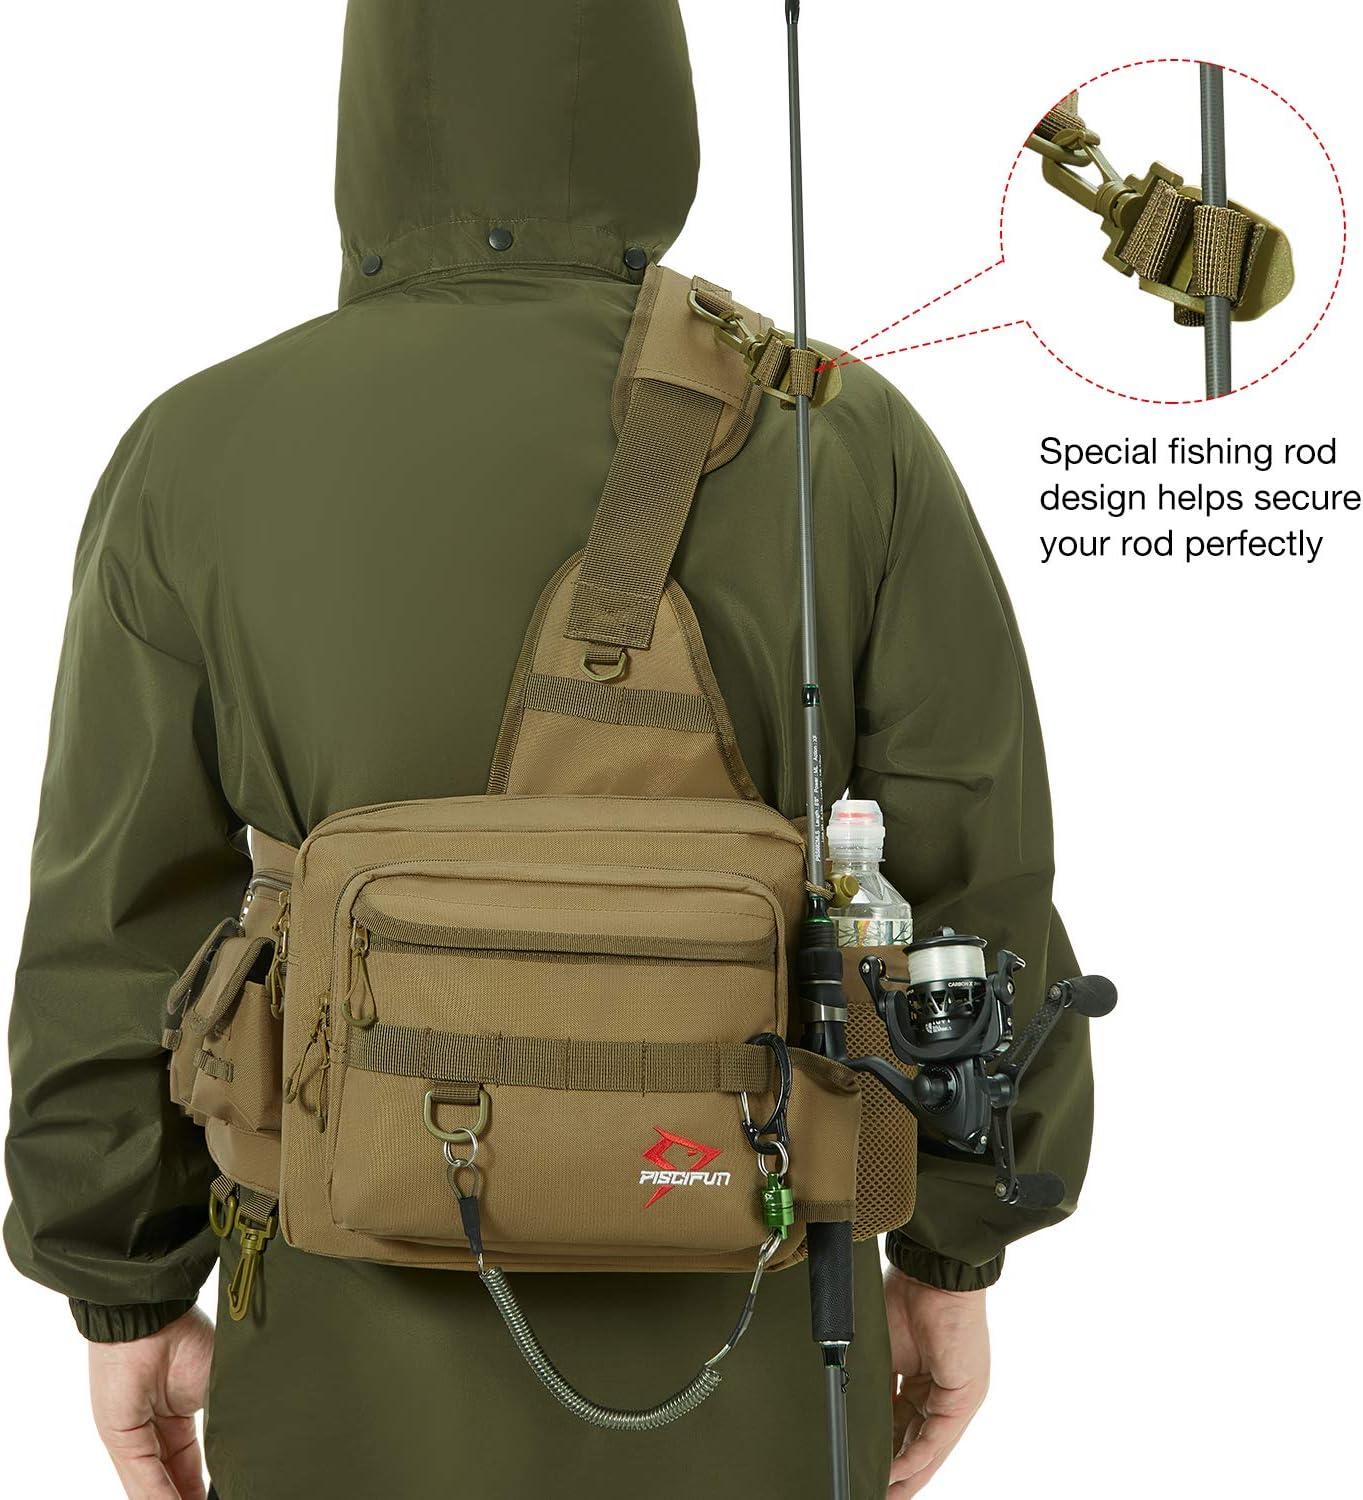 Piscifun Sling Fishing Tackle Bag, Outdoor Fishing Storage Pack, Water-Resistant Fishing Bag Cross Body Sling Bag Camouflage, Green